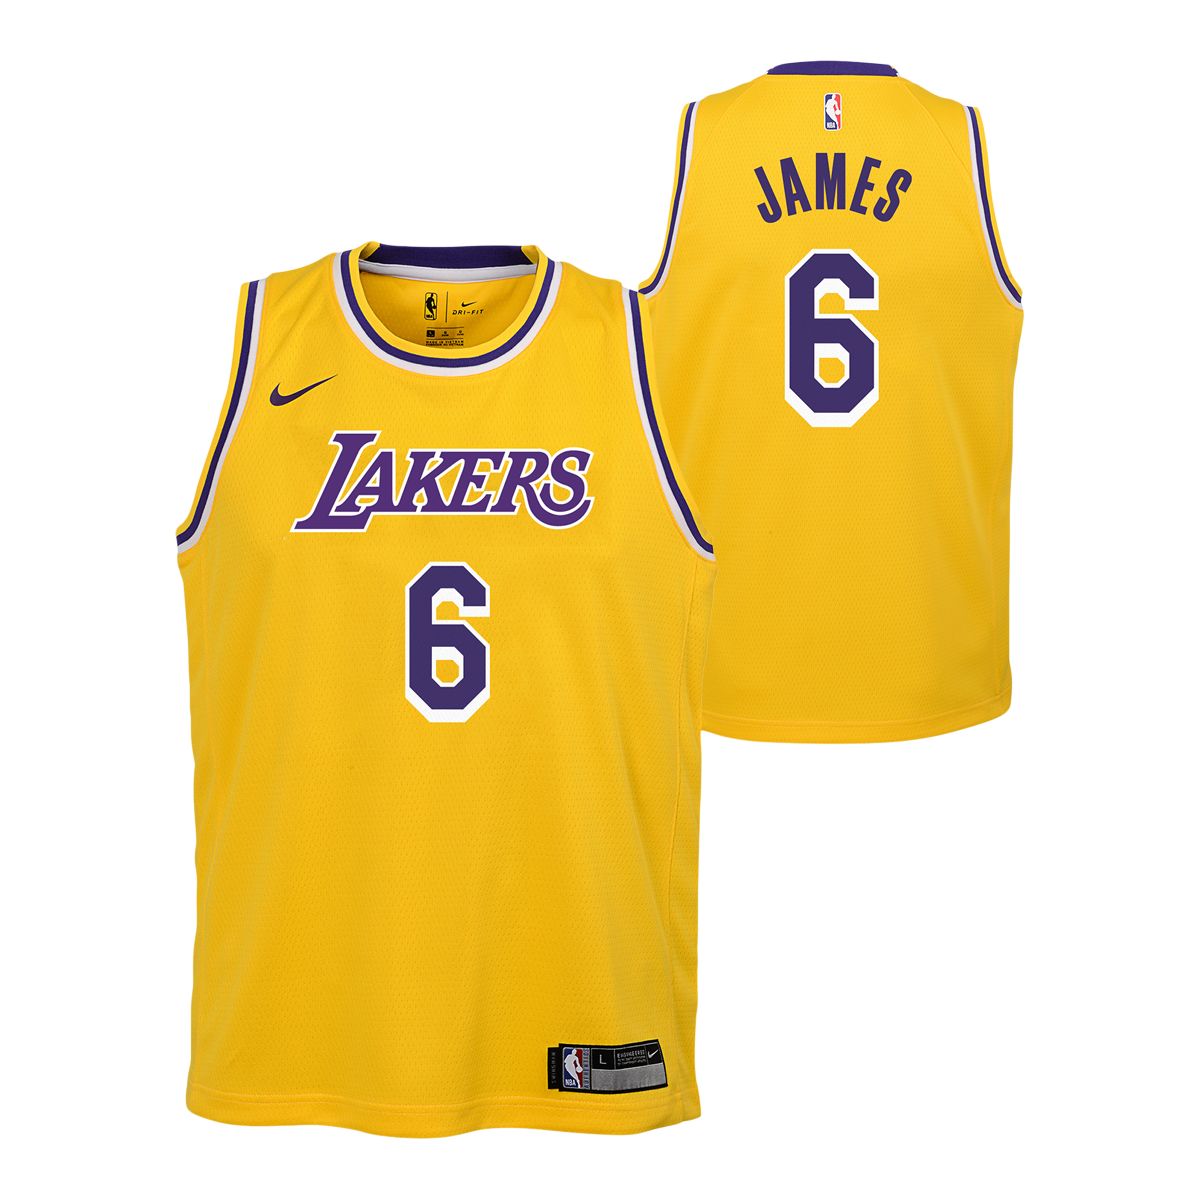 Los Angeles Lakers Jersey Kid's Nike NBA Basketball Shirt Top - New